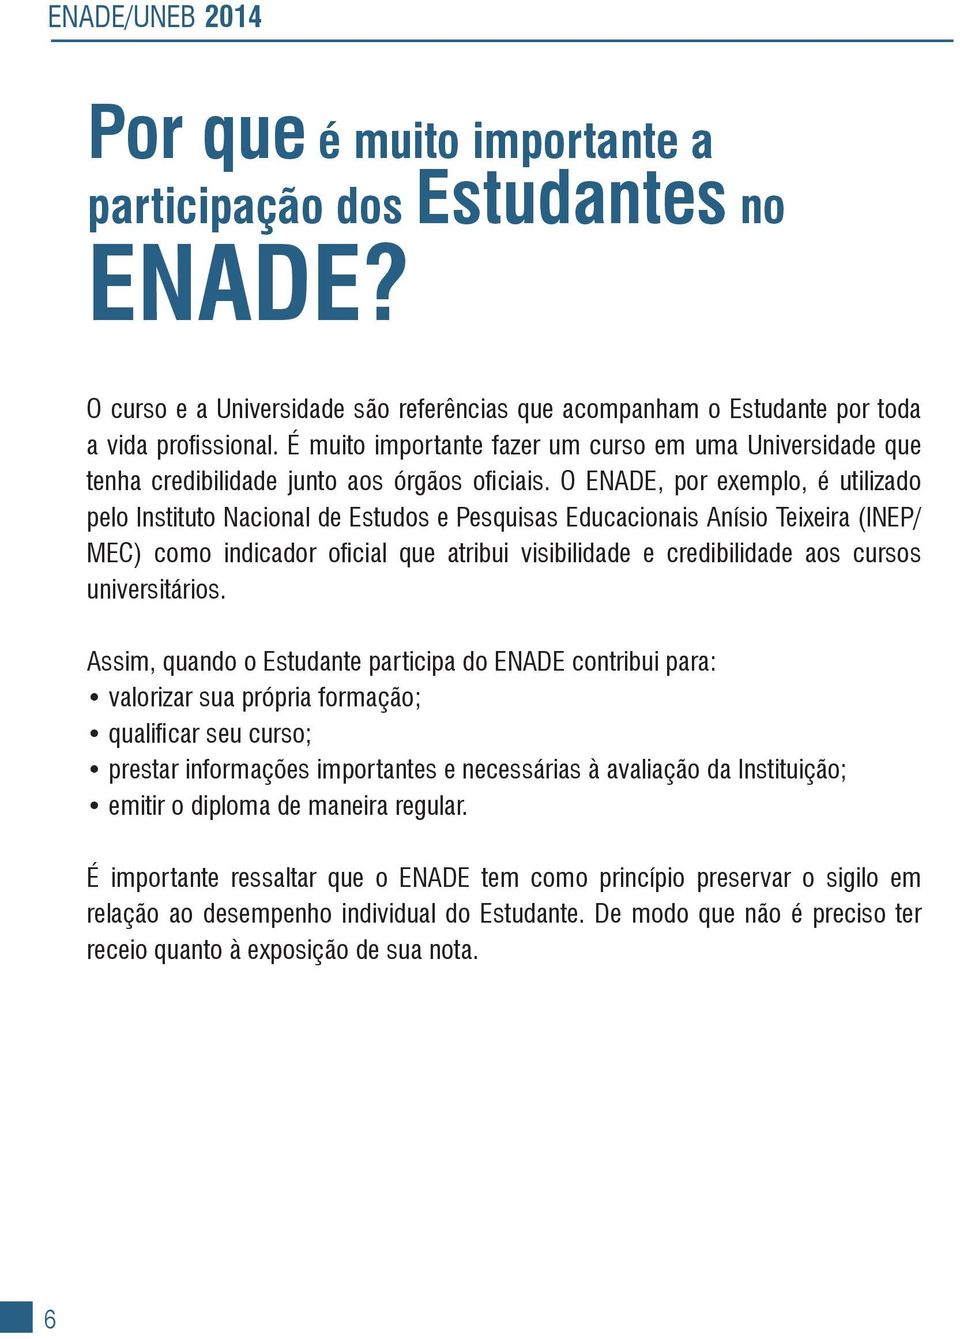 O ENADE, por exemplo, é utilizado pelo Instituto Nacional de Estudos e Pesquisas Educacionais Anísio Teixeira (Inep/ MEC) como indicador oficial que atribui visibilidade e credibilidade aos cursos